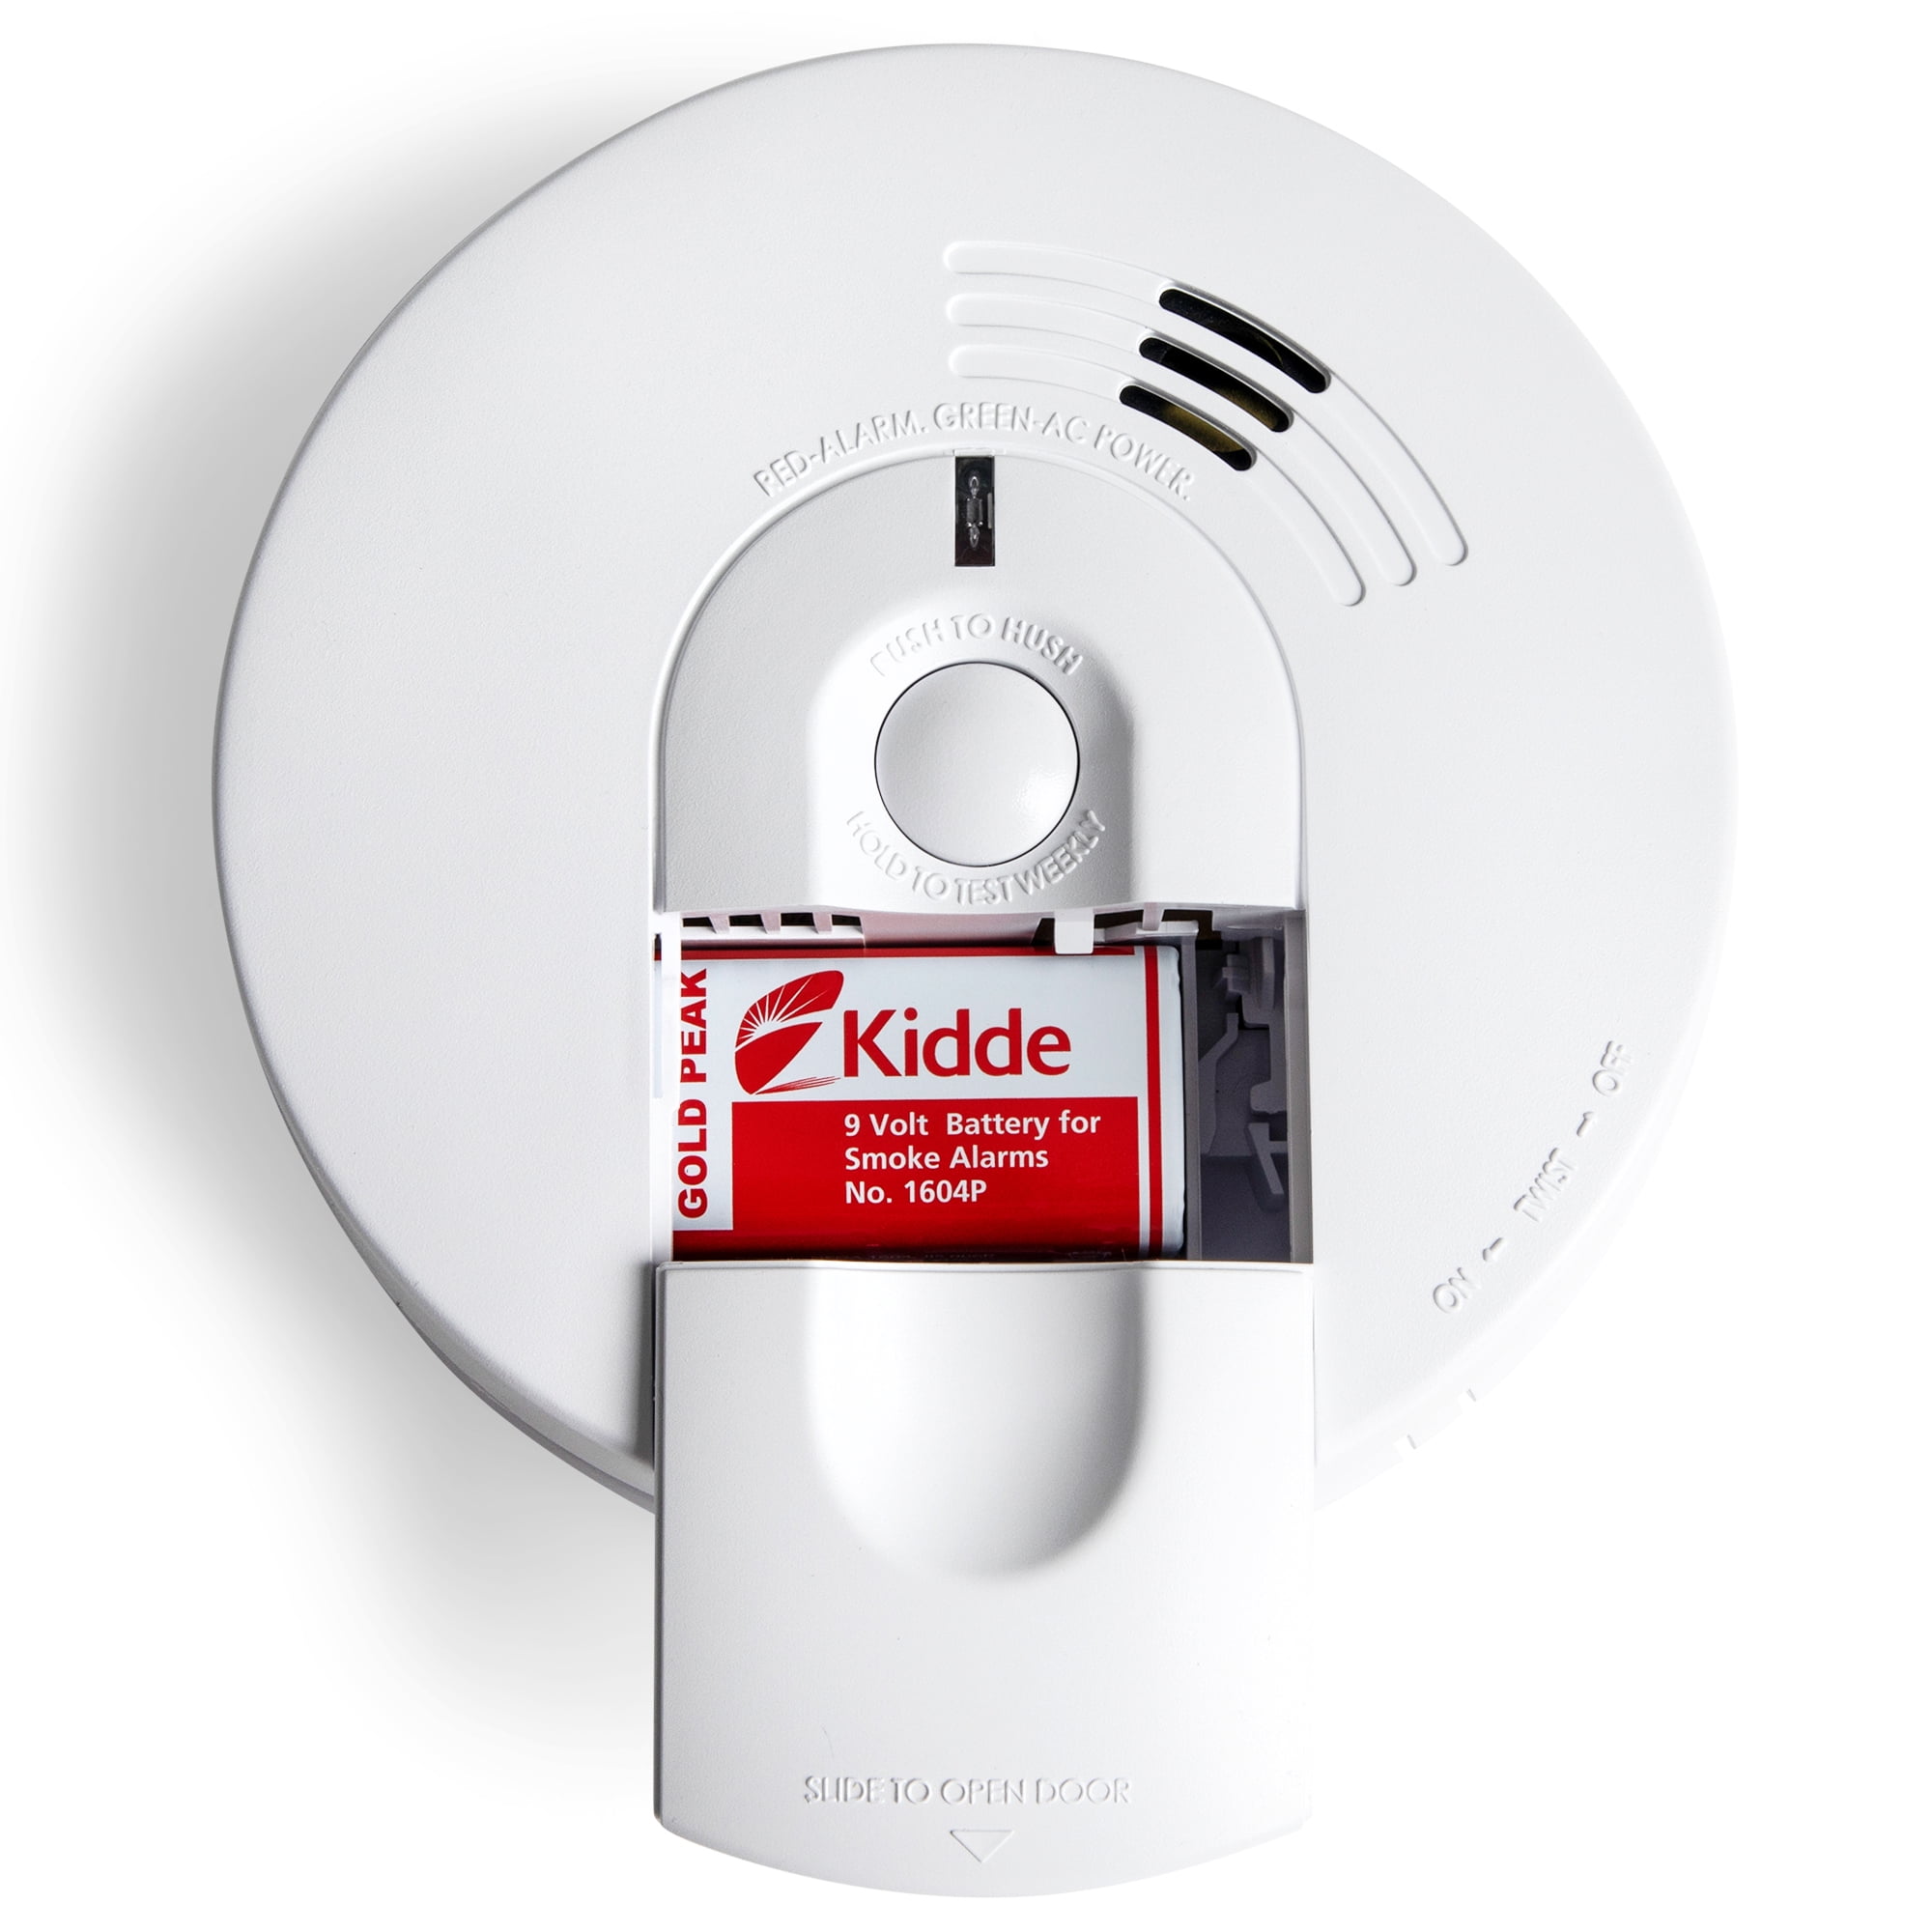 Kidde I4618 Hardwire Smoke Alarm I4618 - Walmart.com - Walmart.com